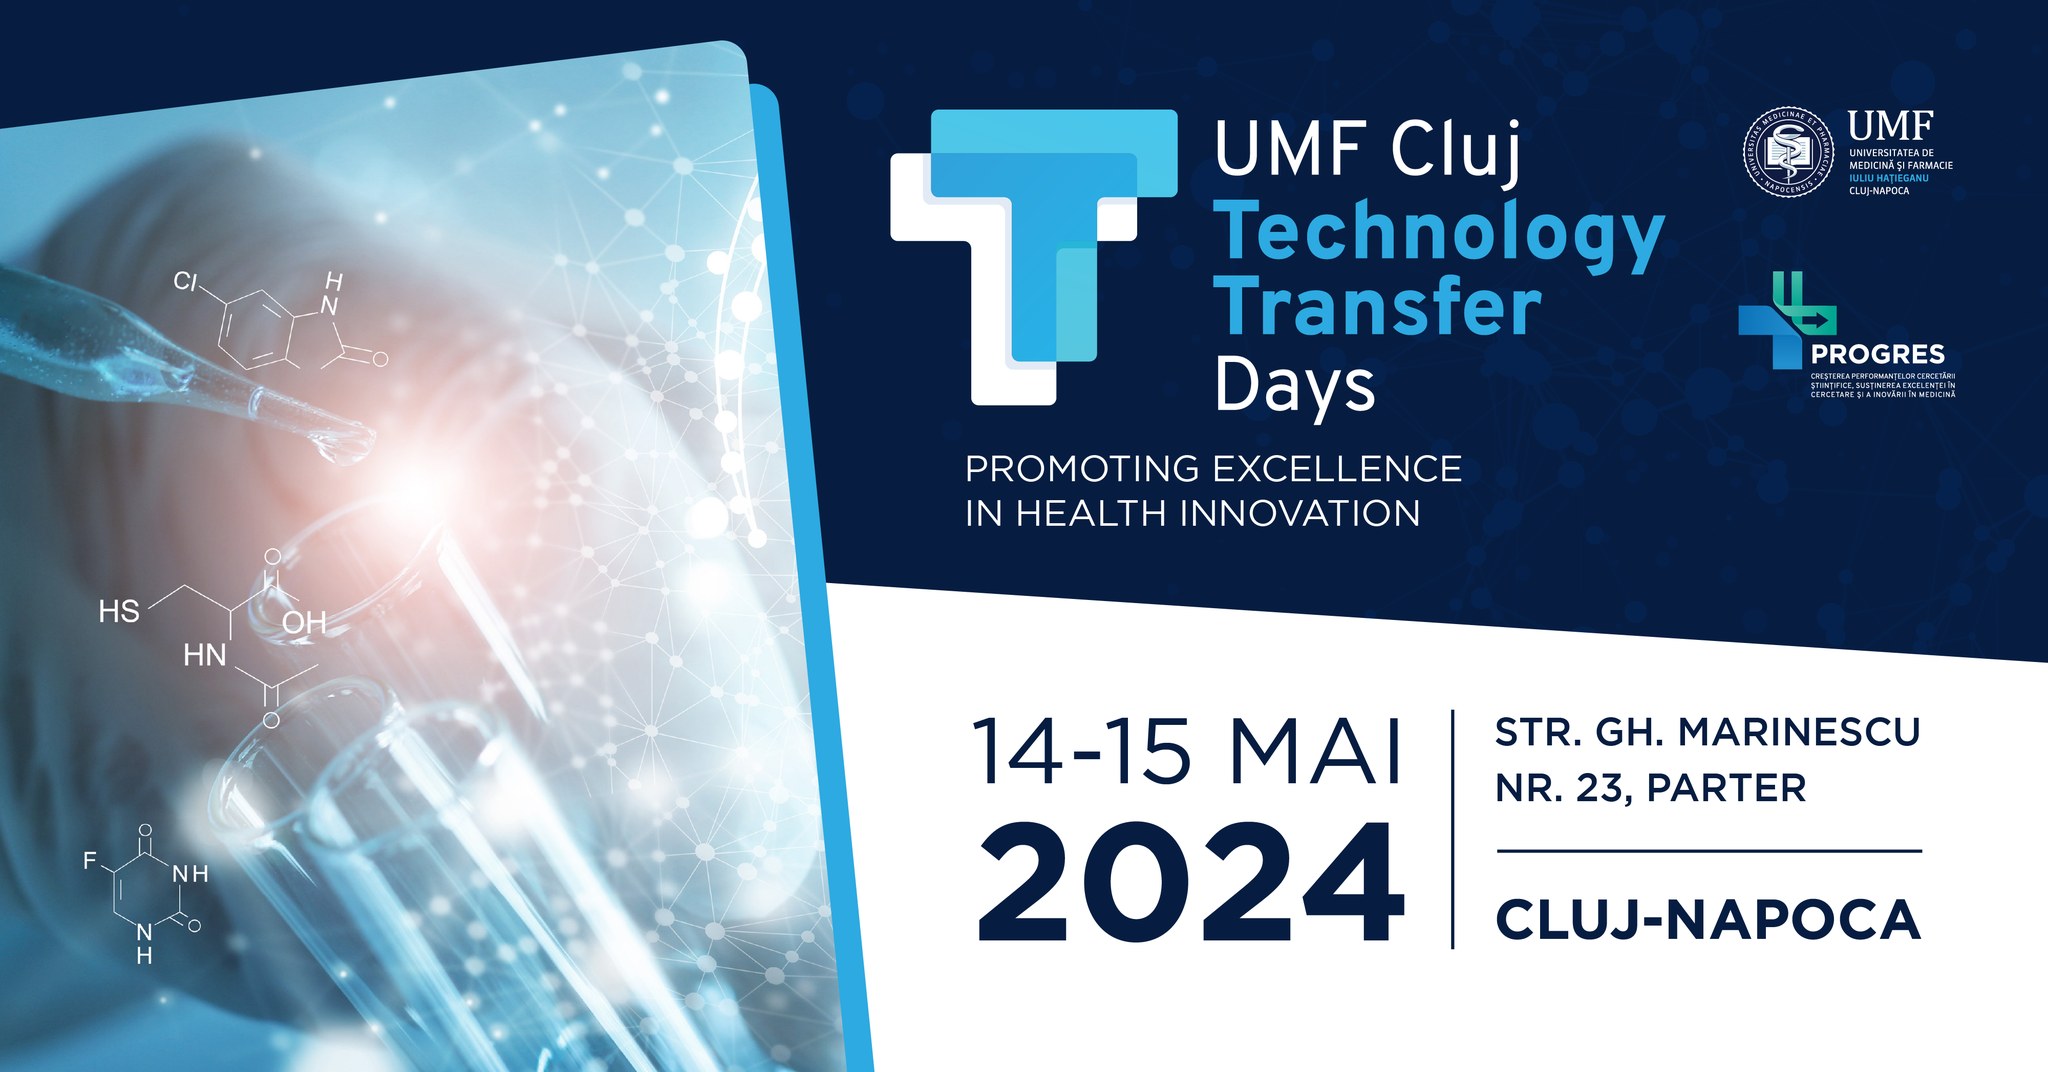  UMF Cluj Technology Transfer Days va avea loc în perioada 14-15 mai 